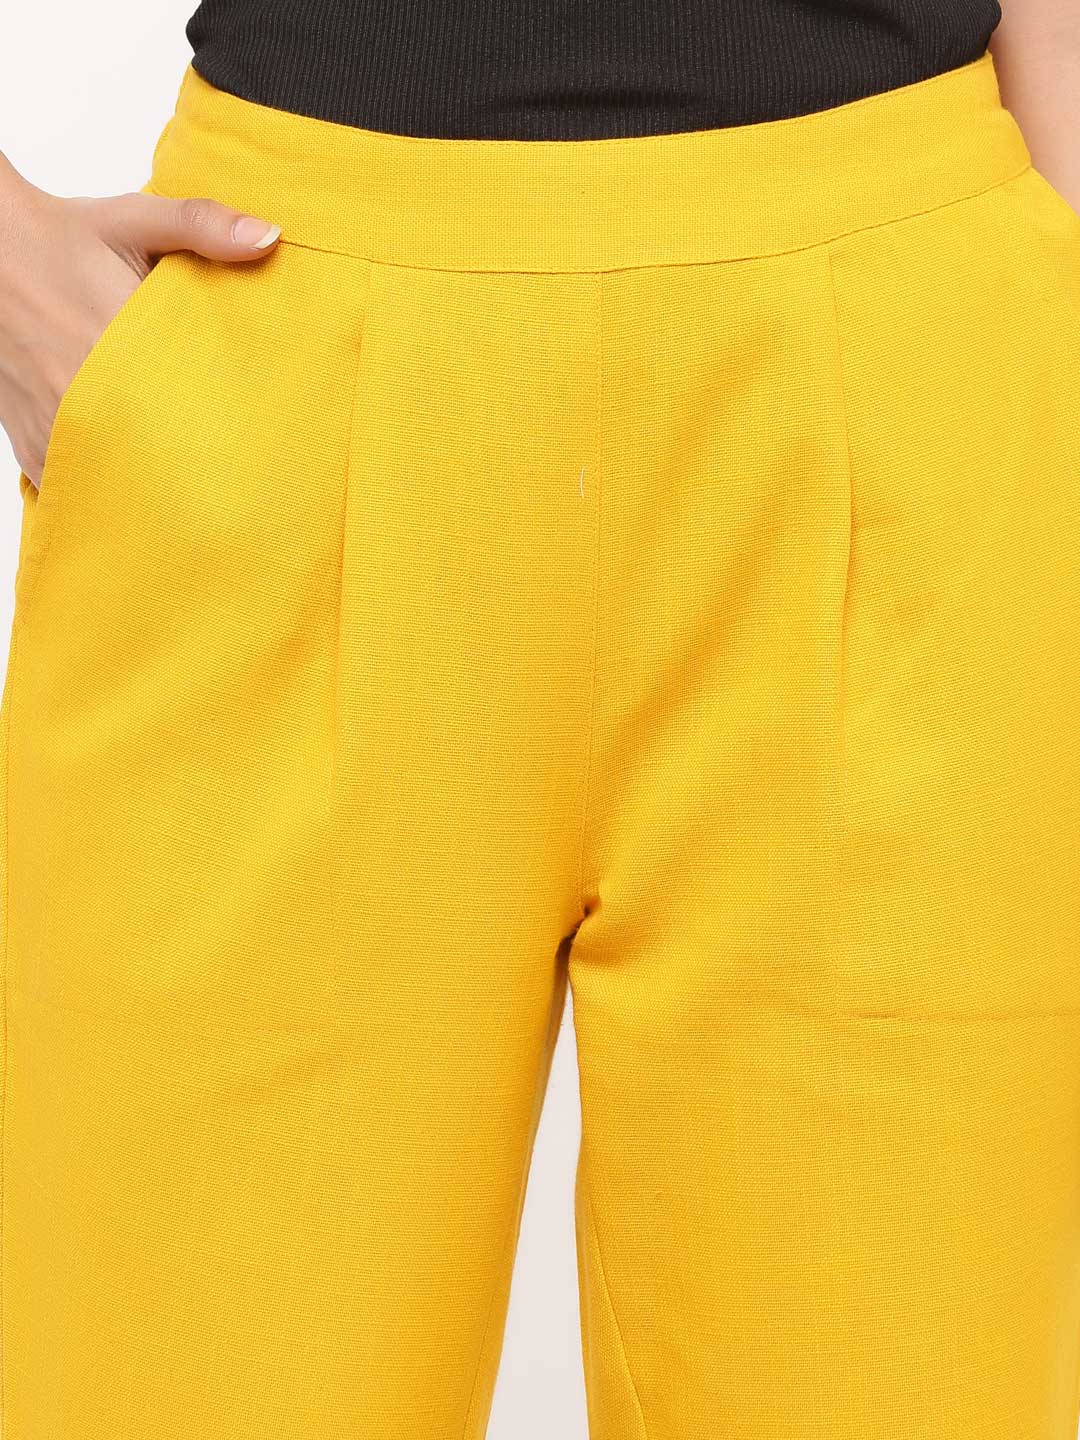 Buy Slim fit cotton slub pants for women